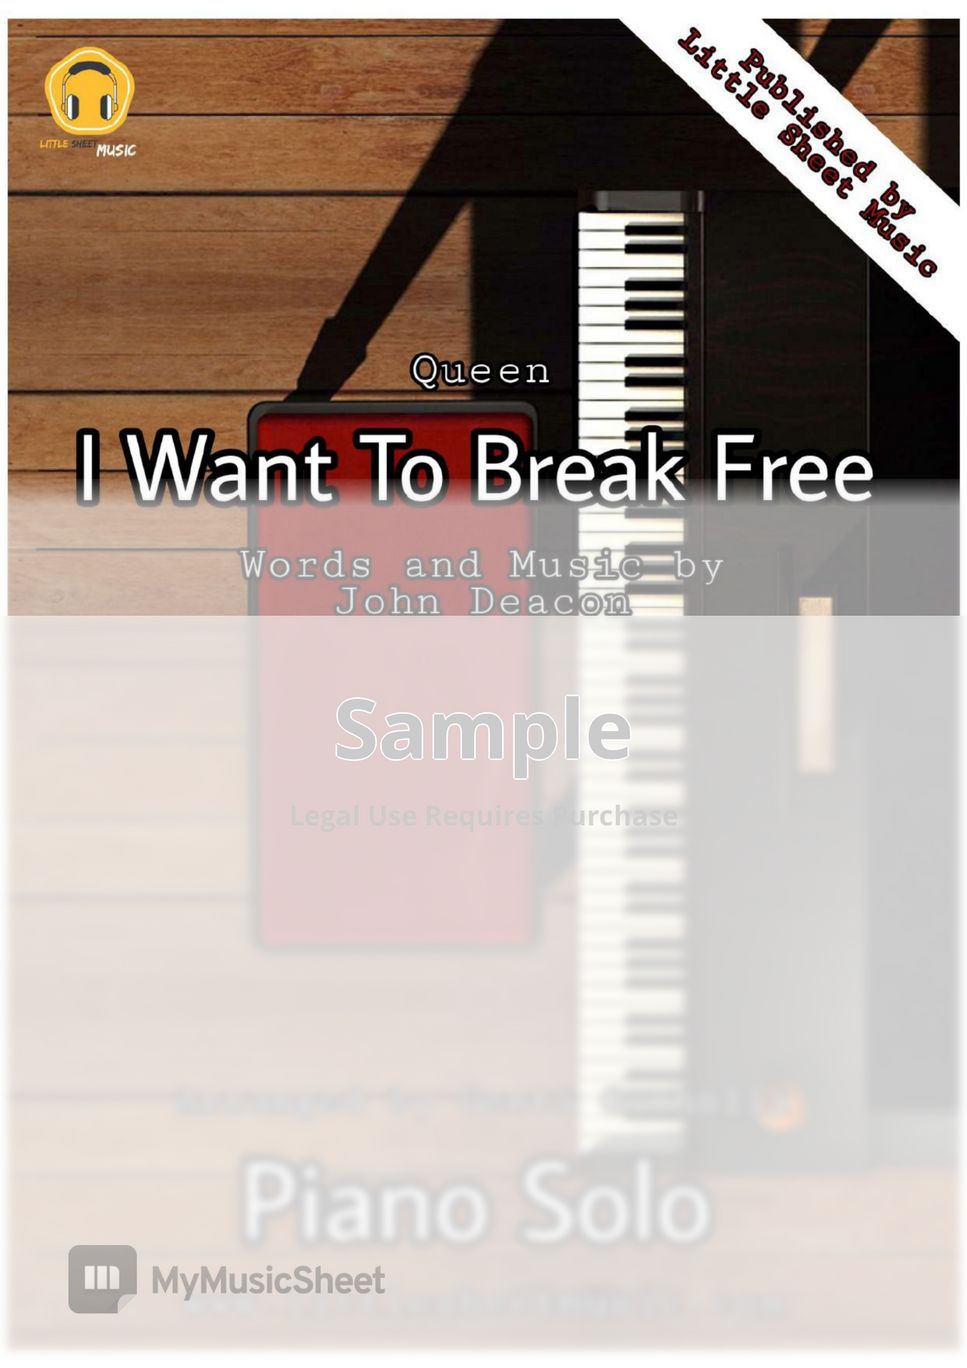 Queen - I Want To Break Free by Genti Guxholli